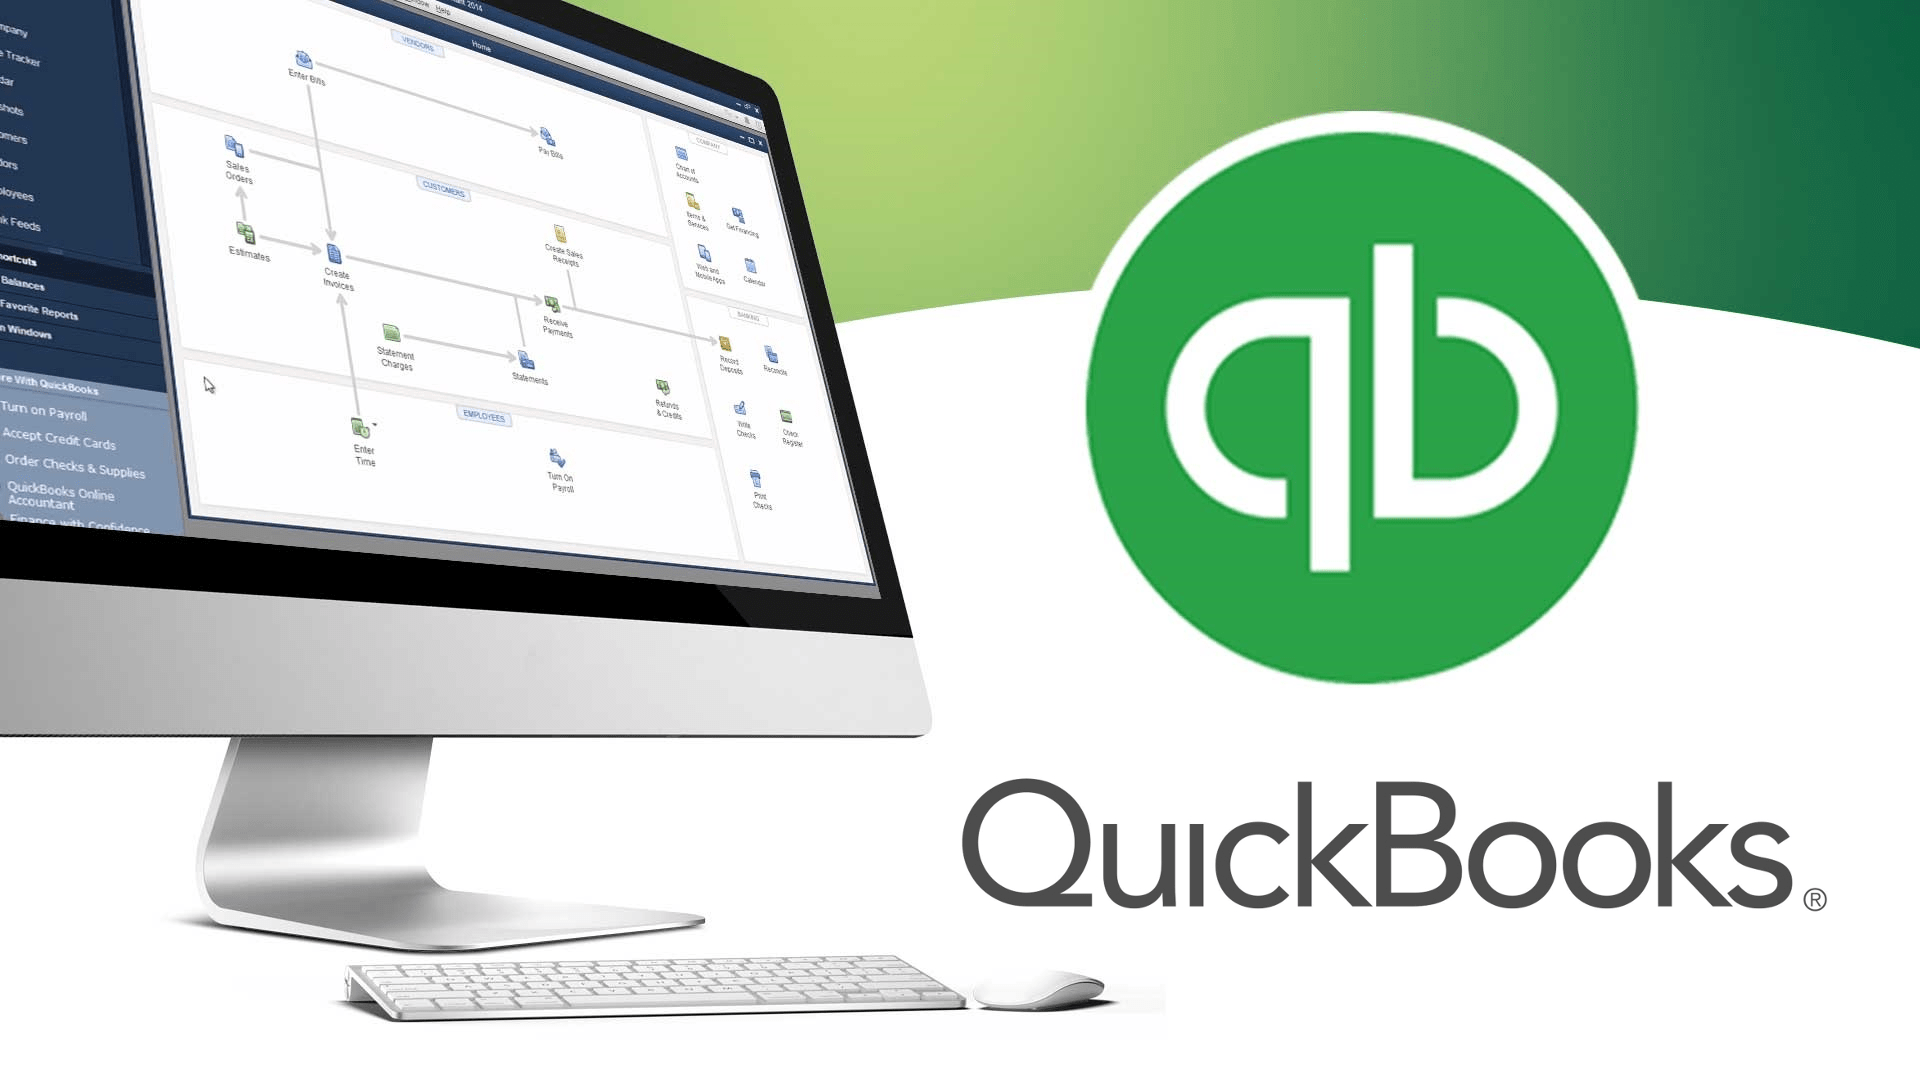 QuickBooks Review: